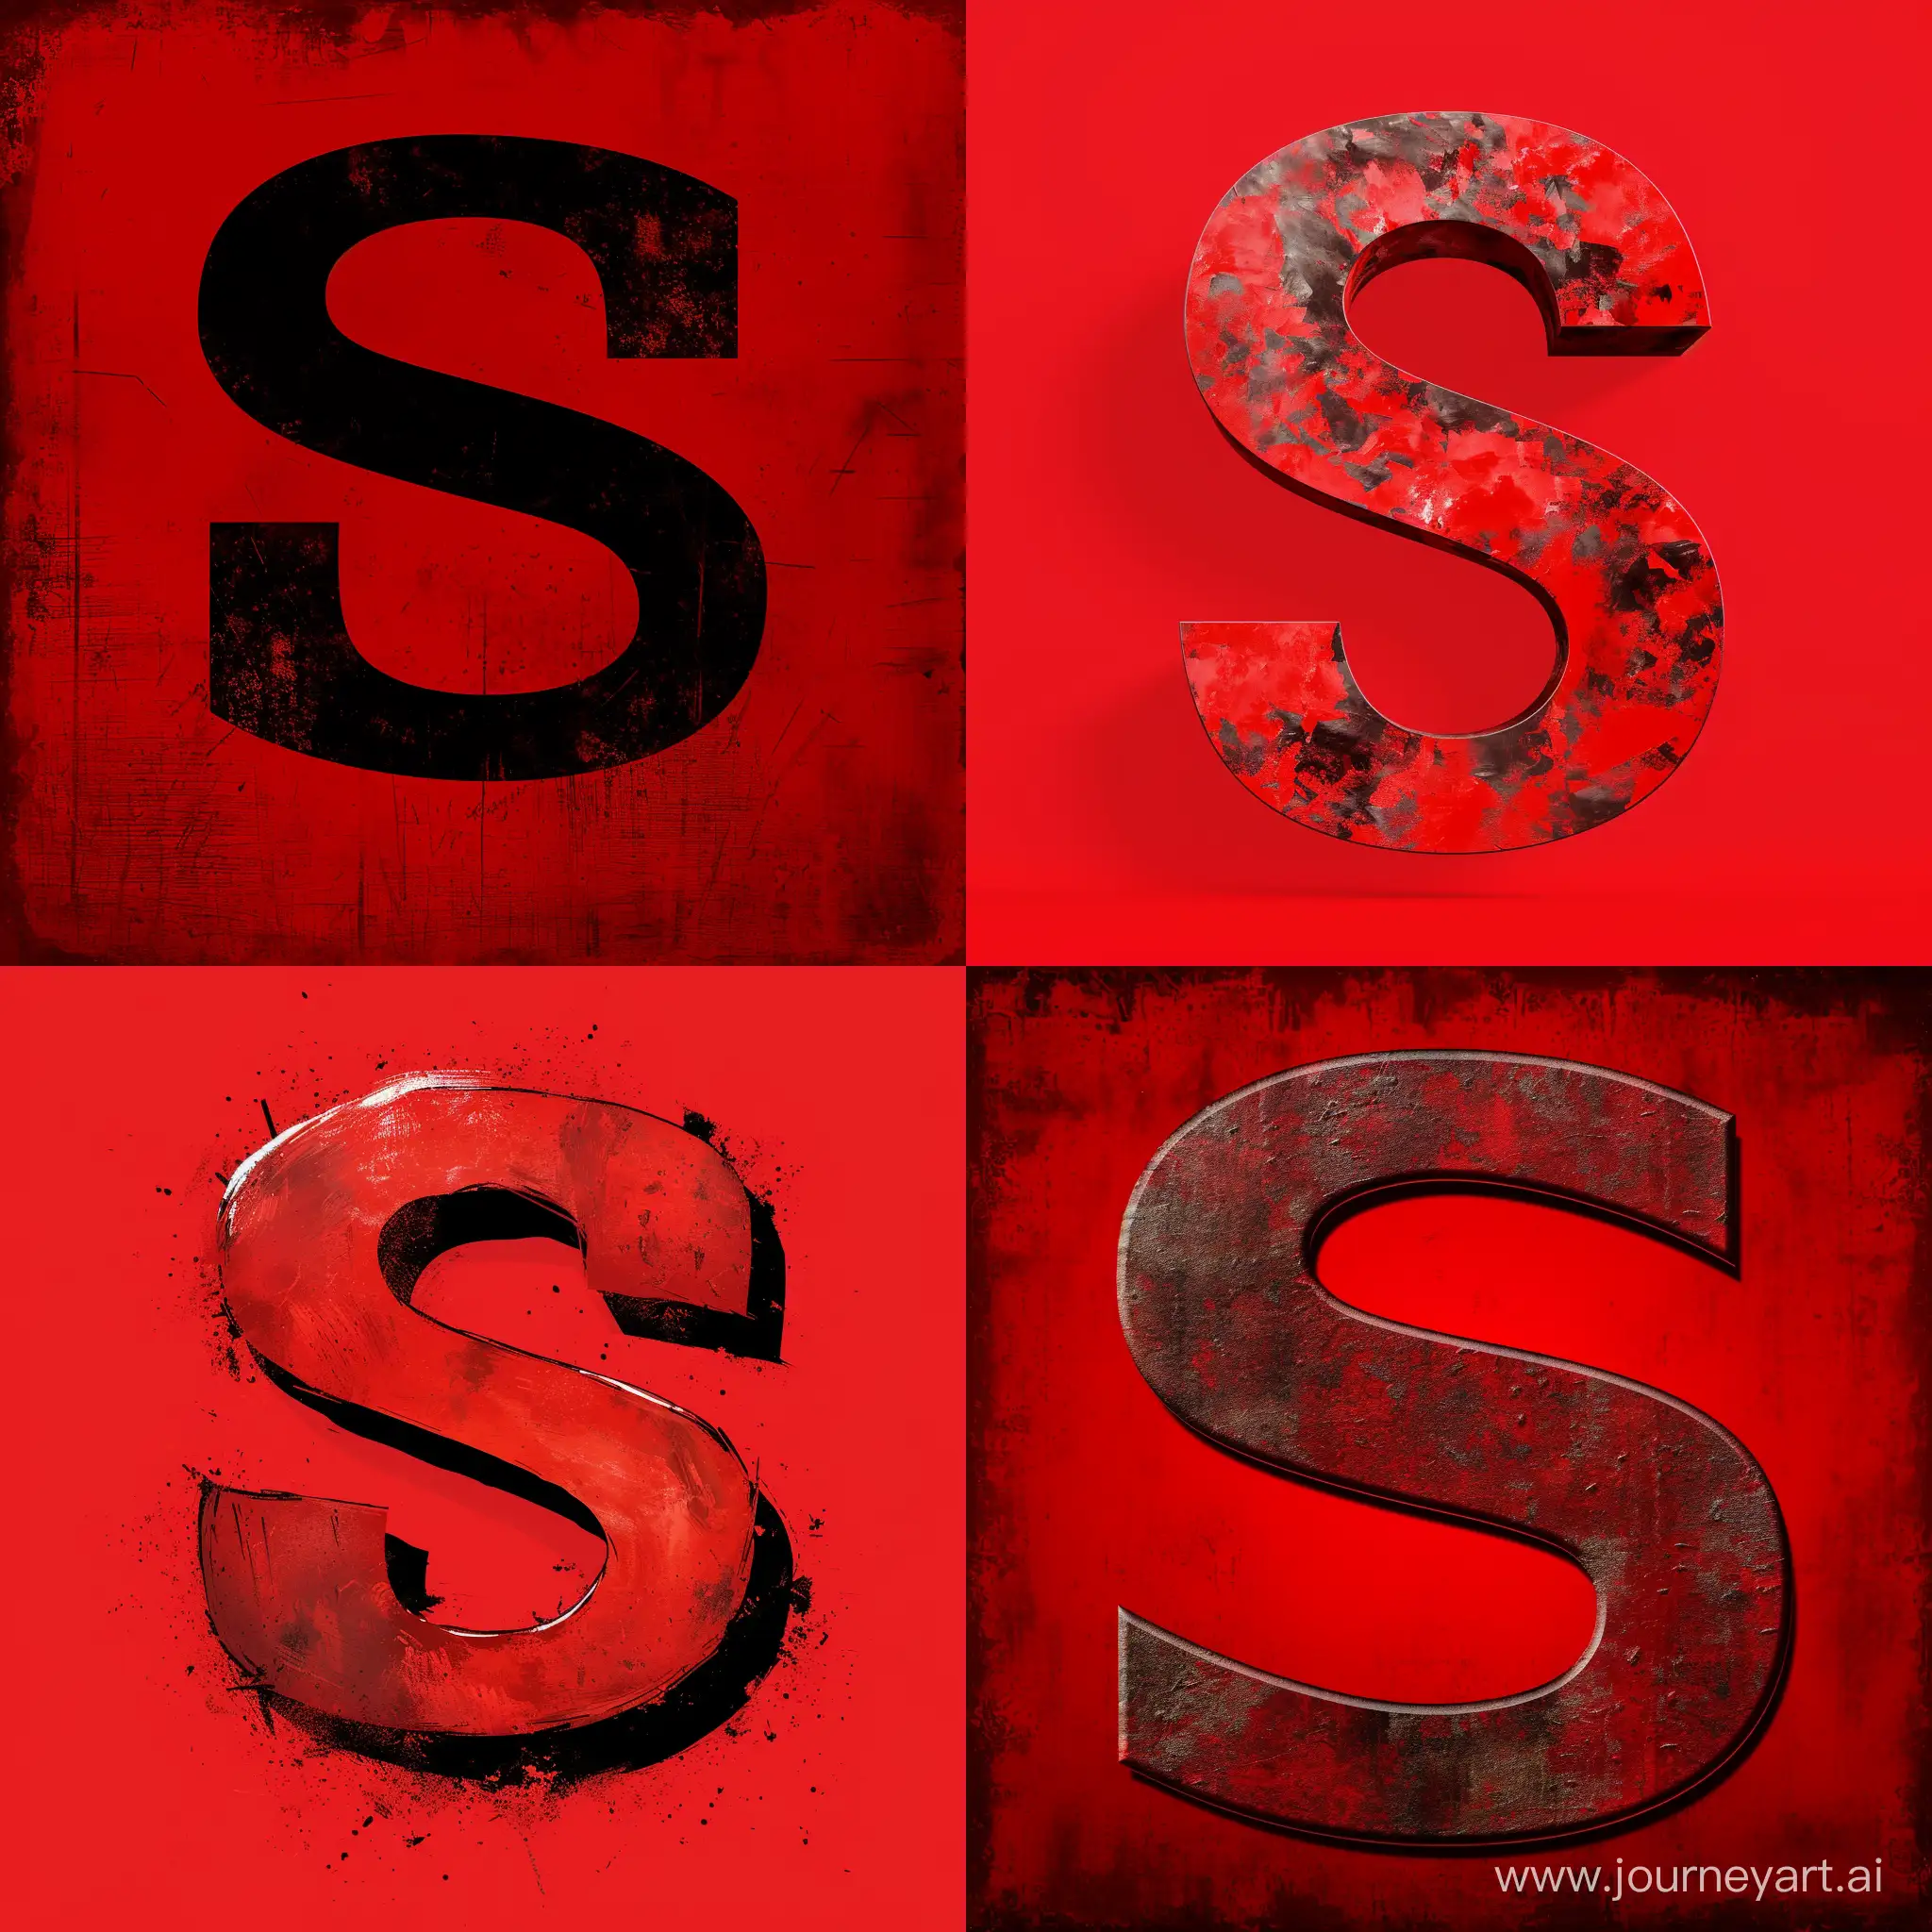 Vibrant-Red-Letter-S-Symbolizes-War-on-a-Uniform-Background